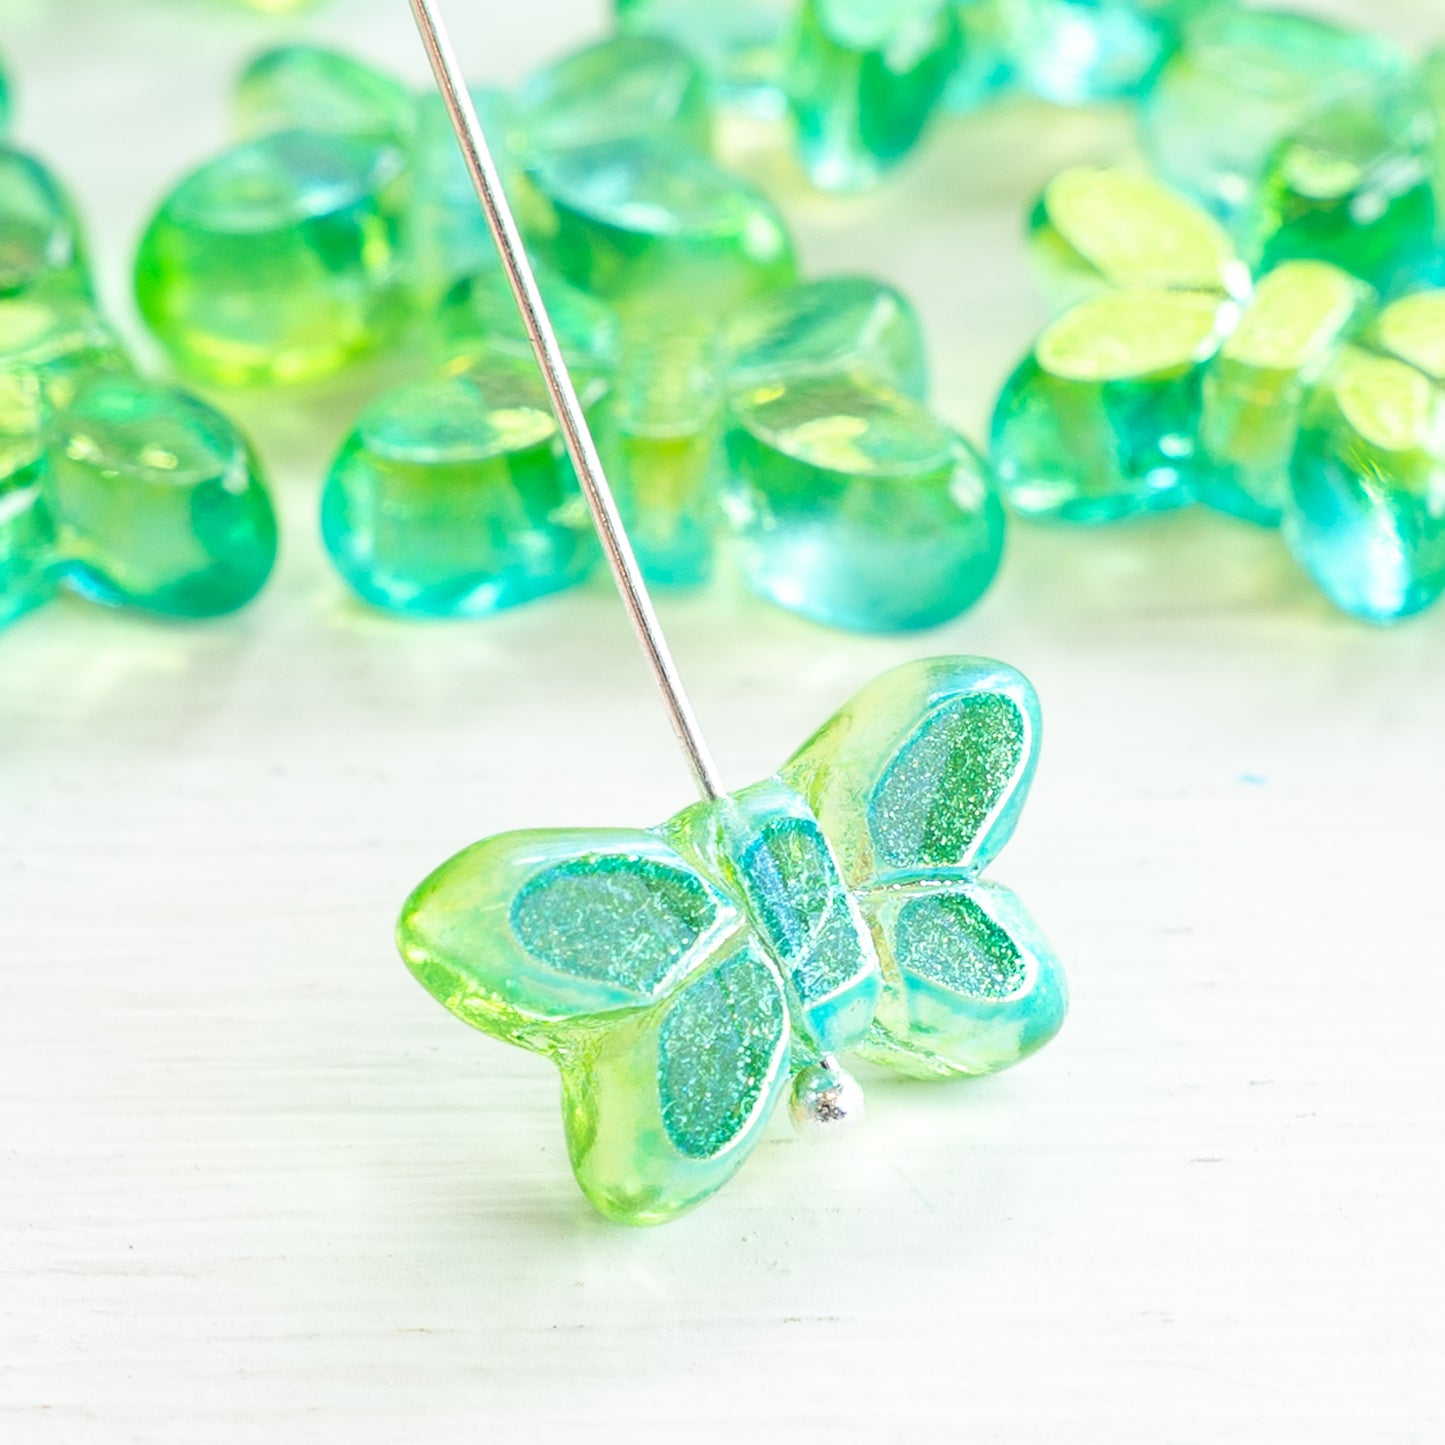 12x20mm Table Cut Butterfly Beads - Light Green